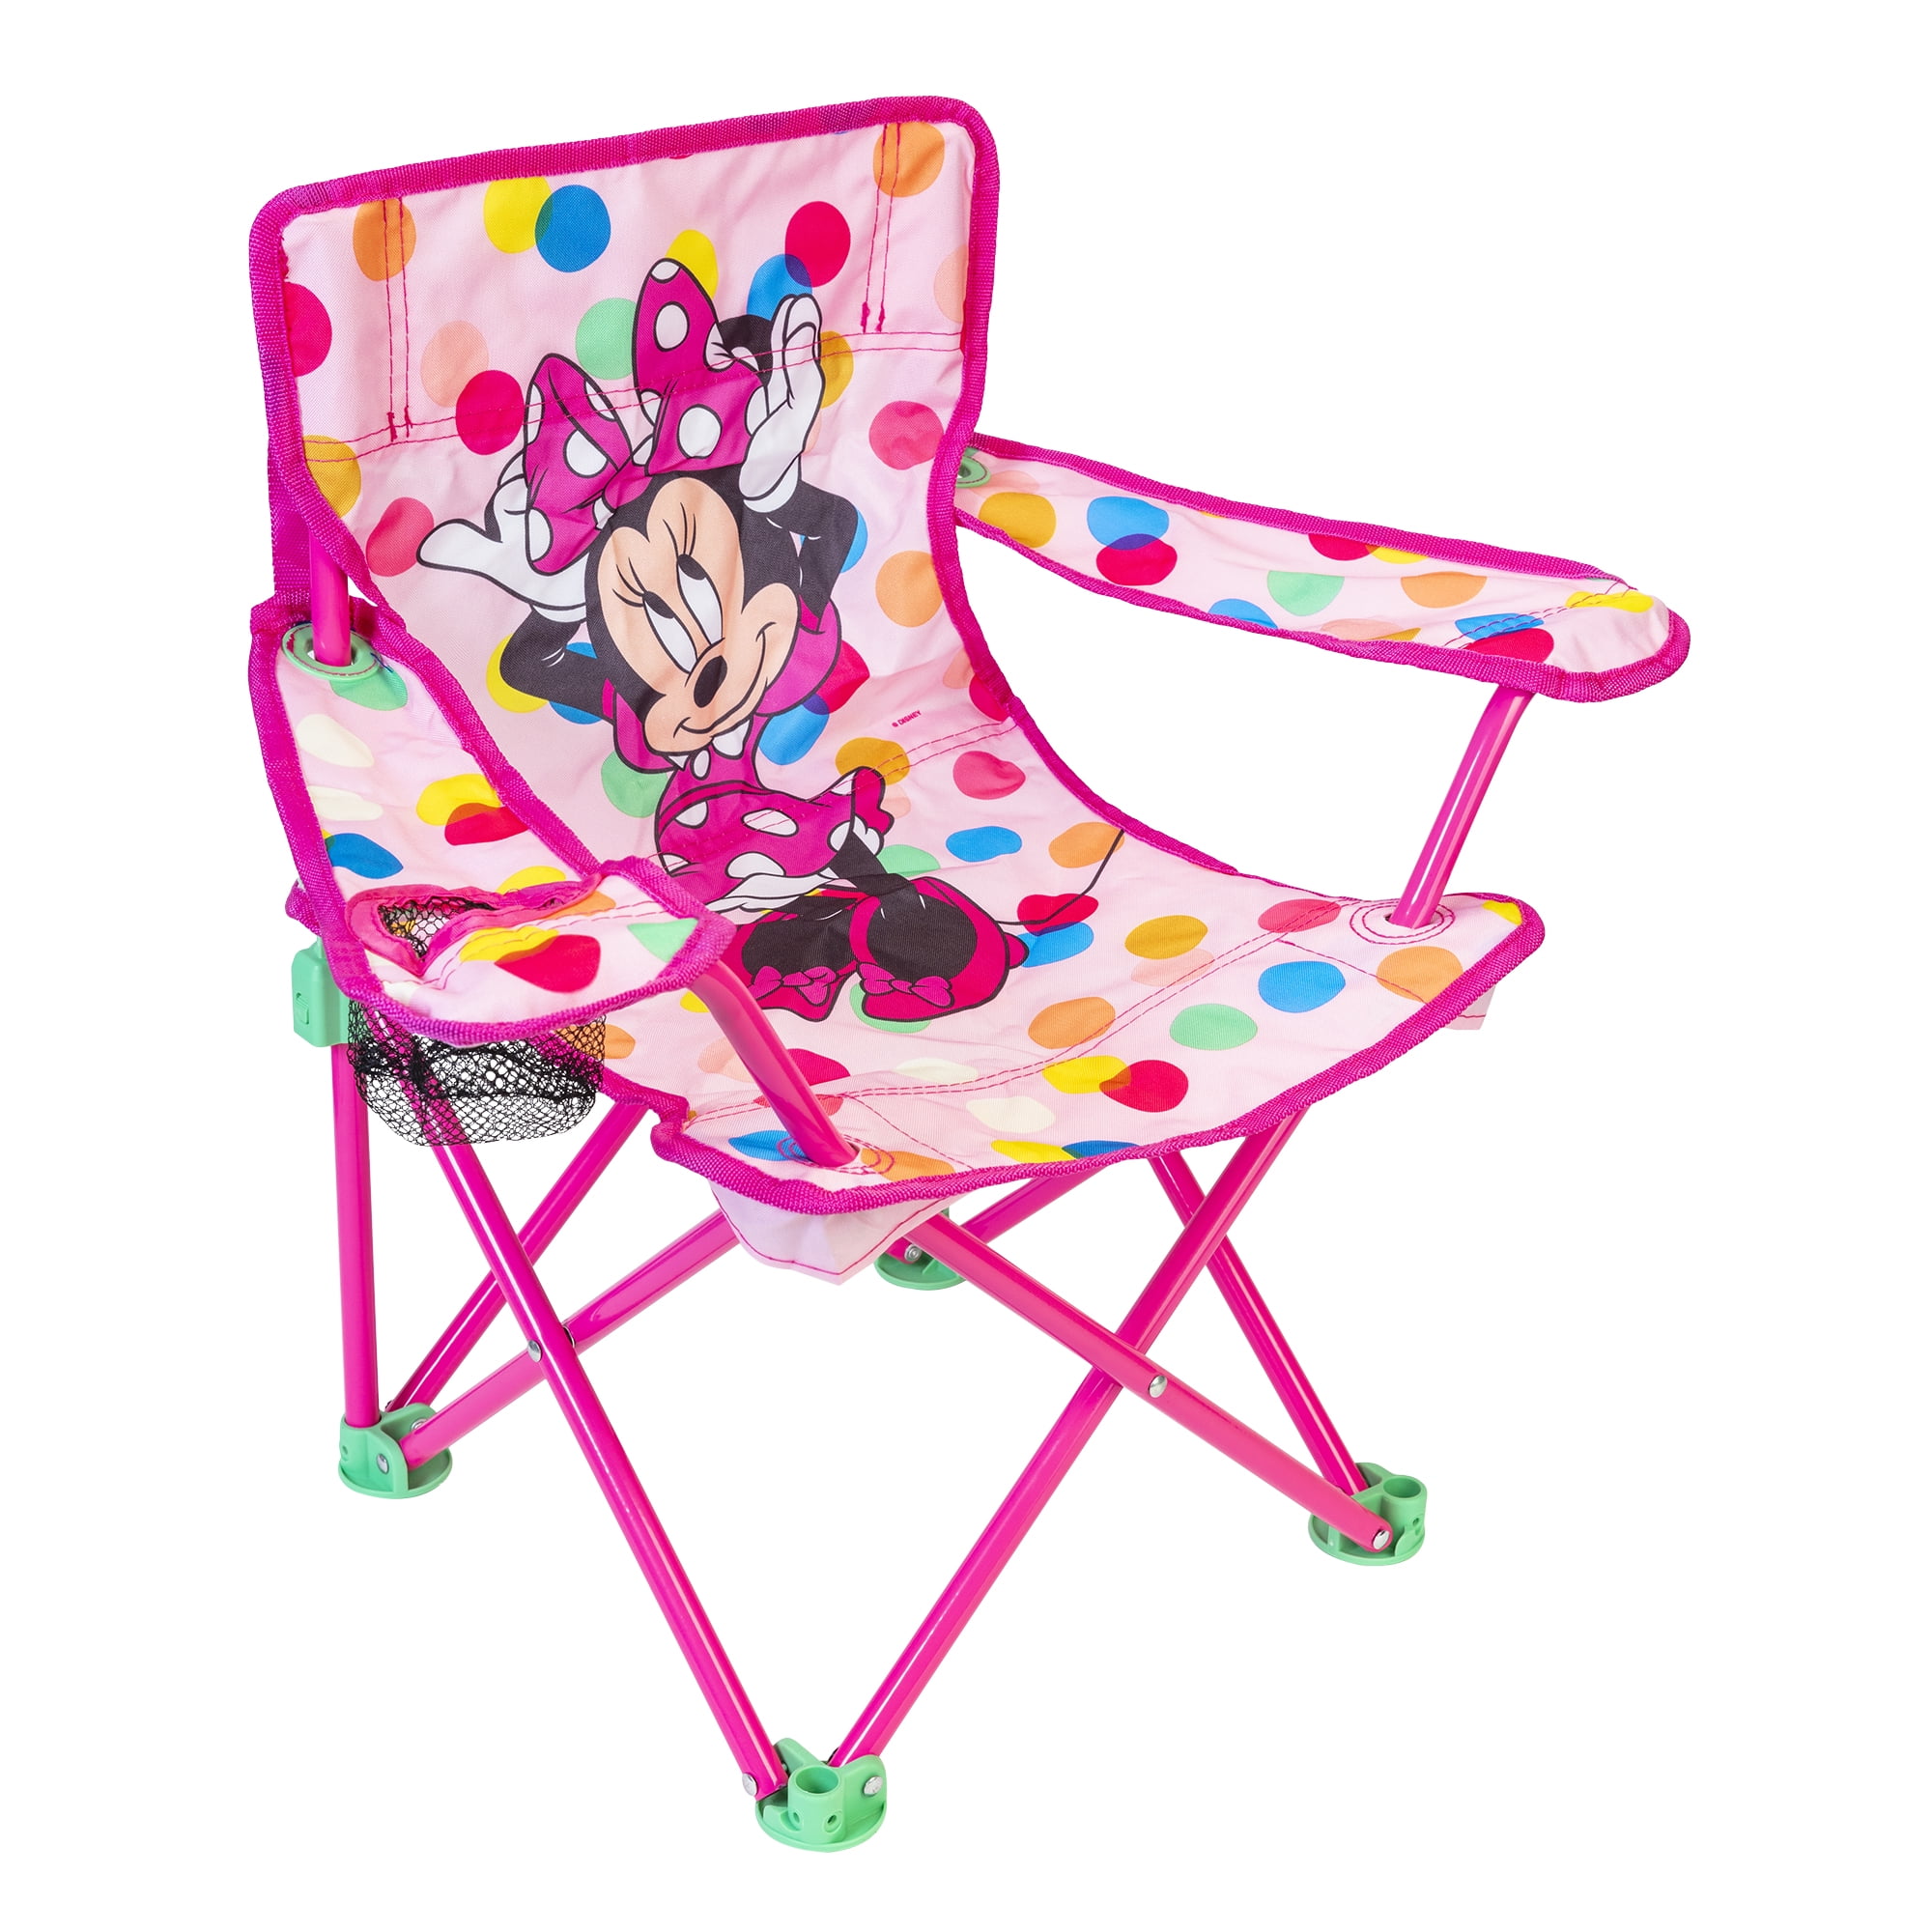 Minnie Patio Chair for Kids Portable Folding Lawn Chair 